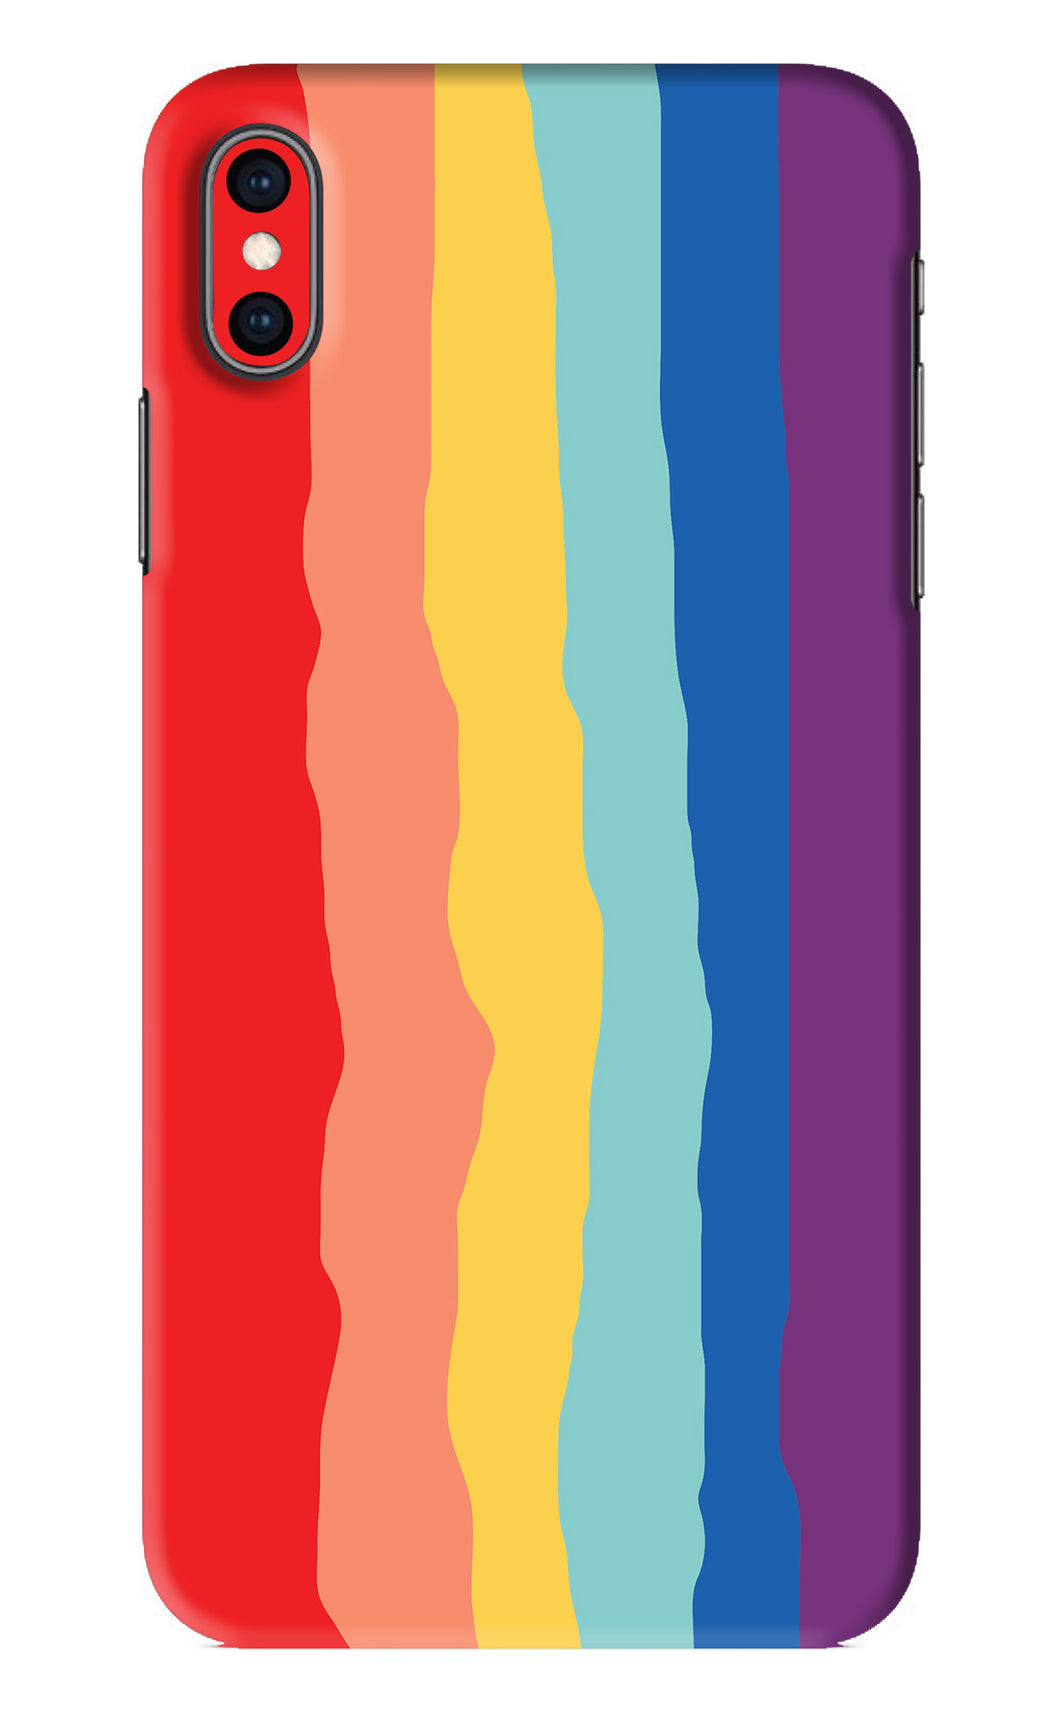 Rainbow iPhone XS Max Back Skin Wrap